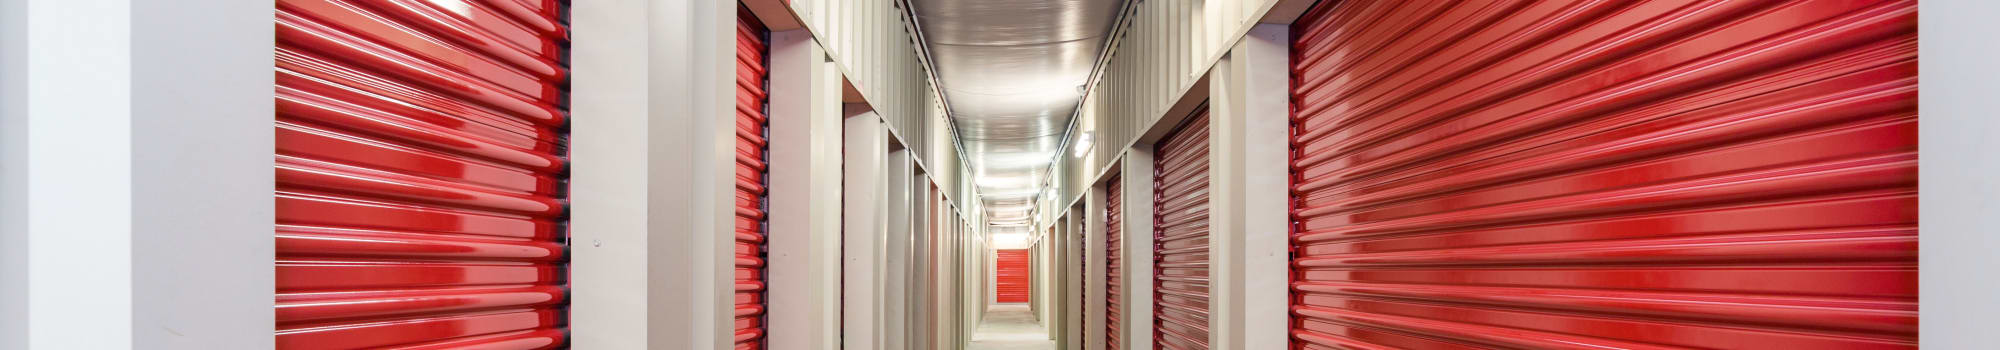 Climate controlled storage at Sharp Storage in Pineville, Missouri